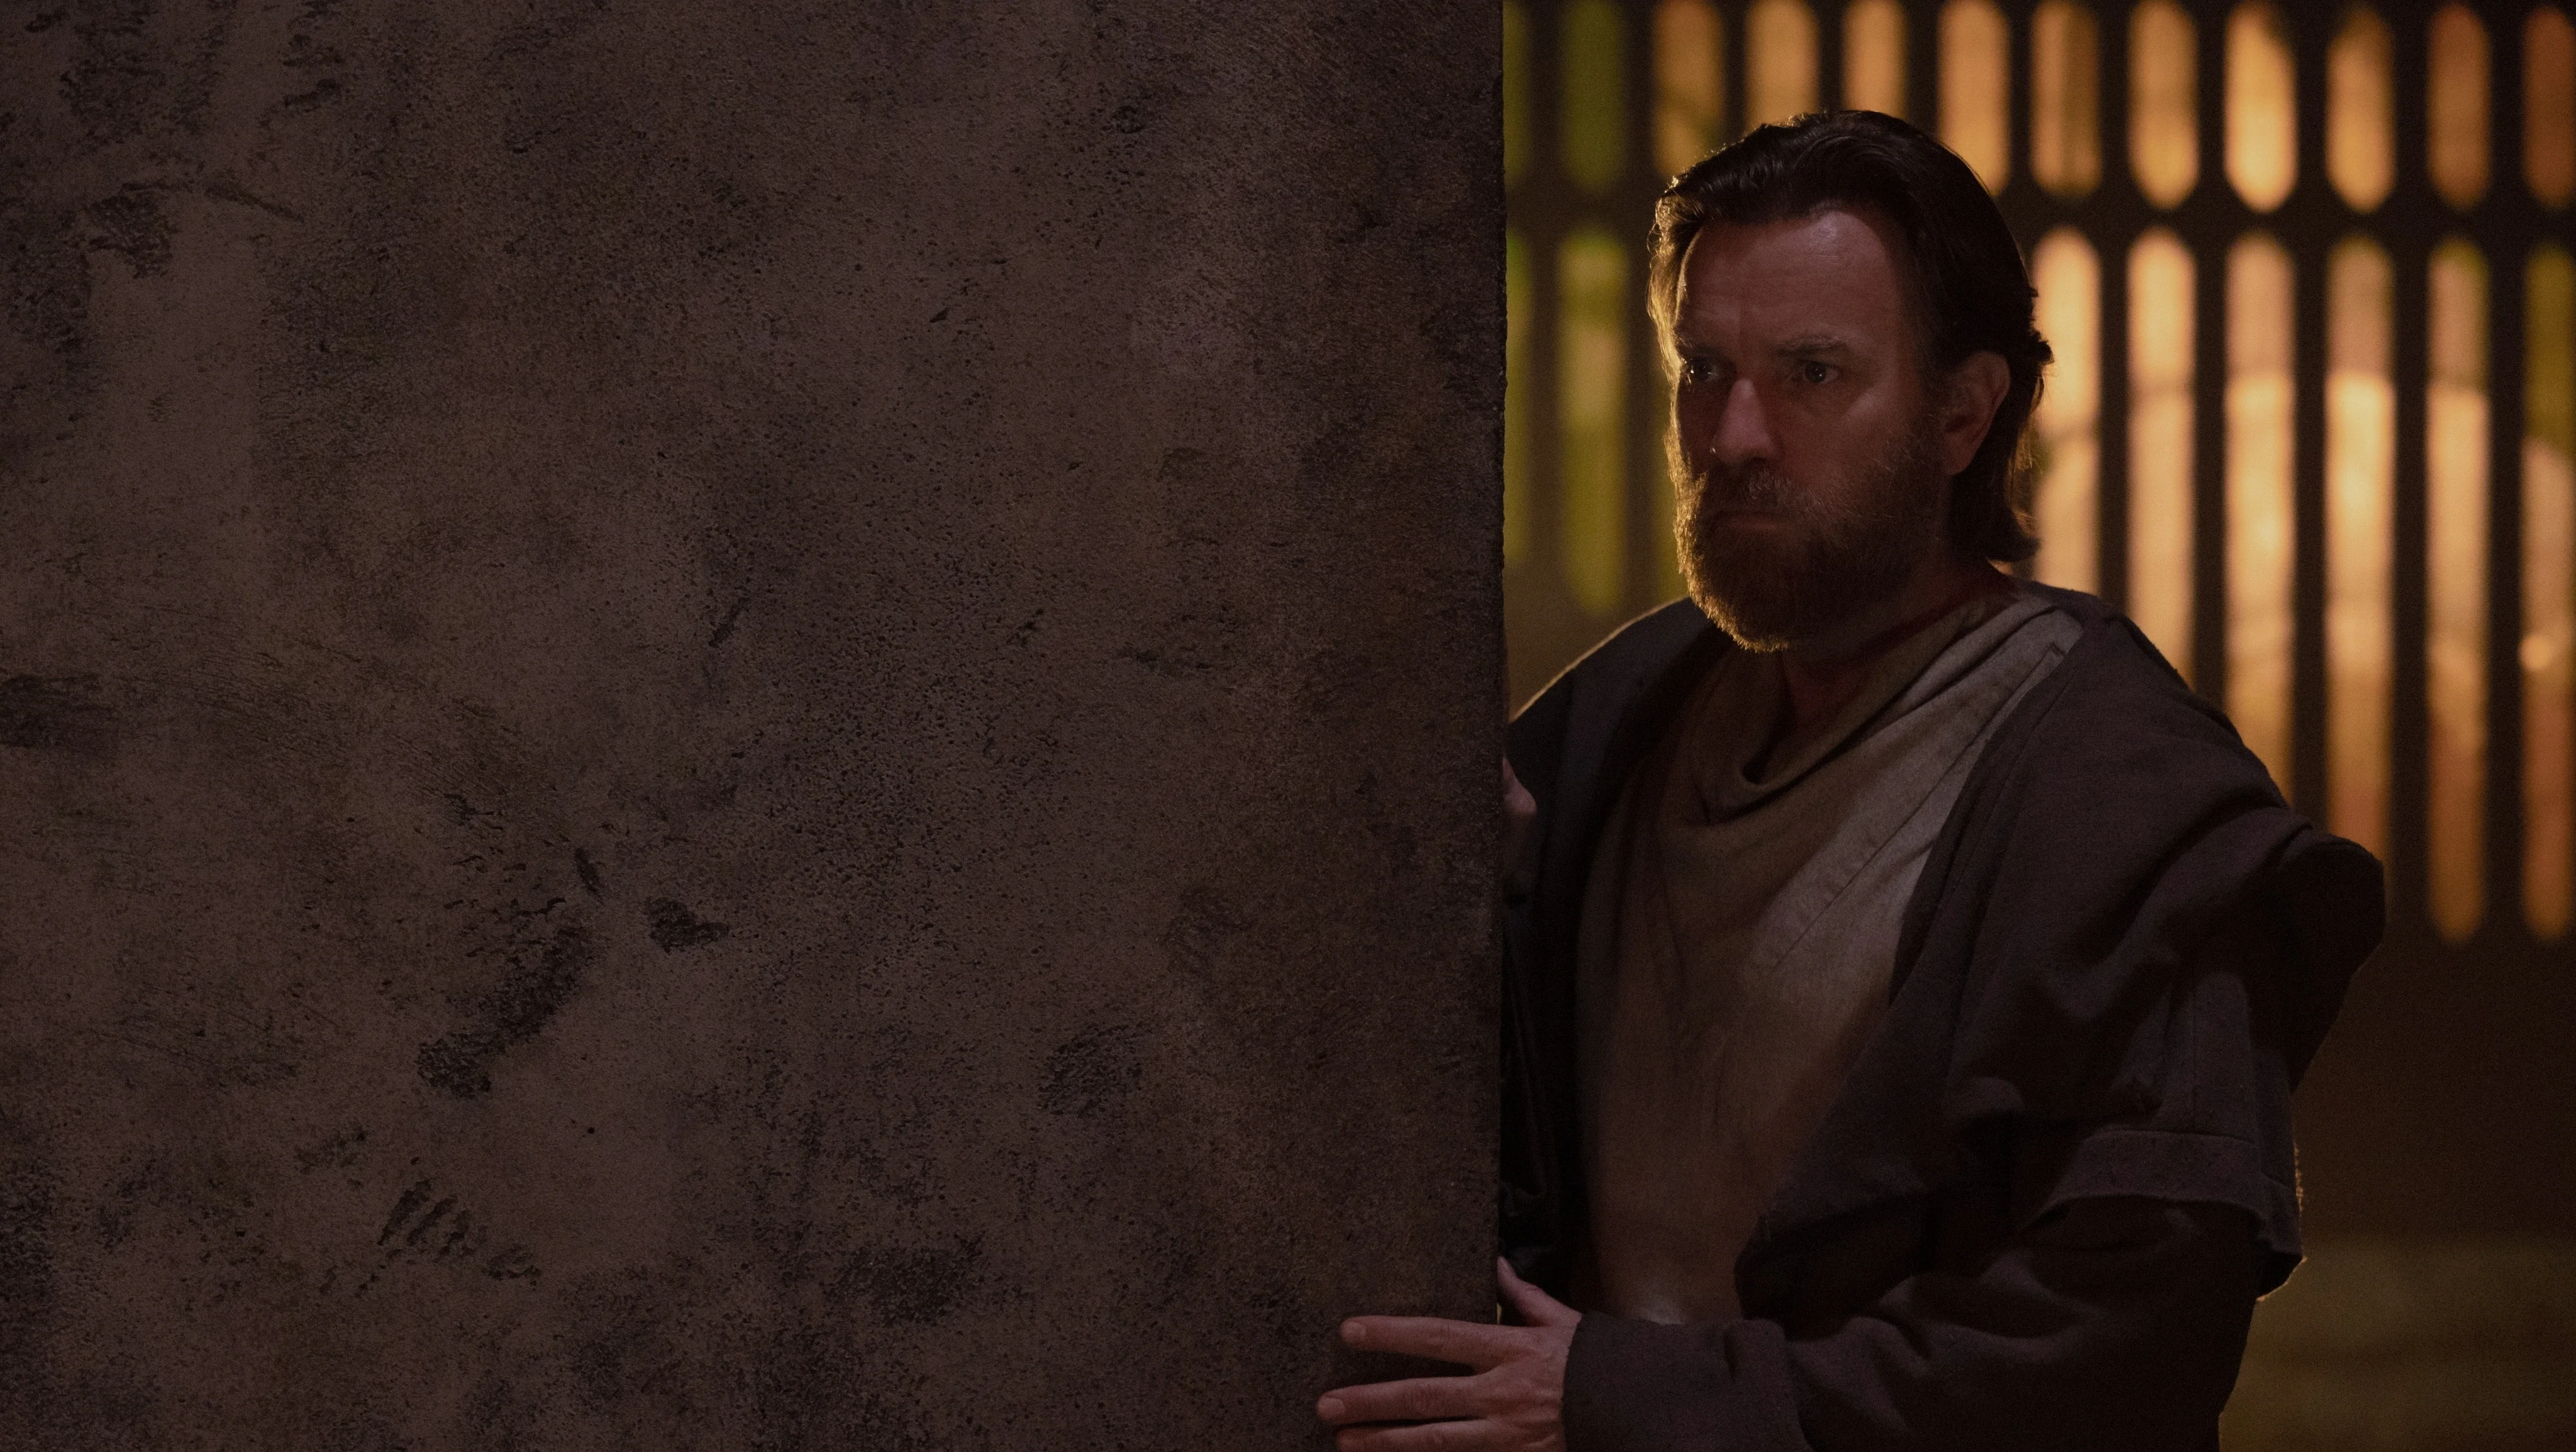 Image of Ewan Mcgregor as Obi Wan Kenobi standing behind a wall